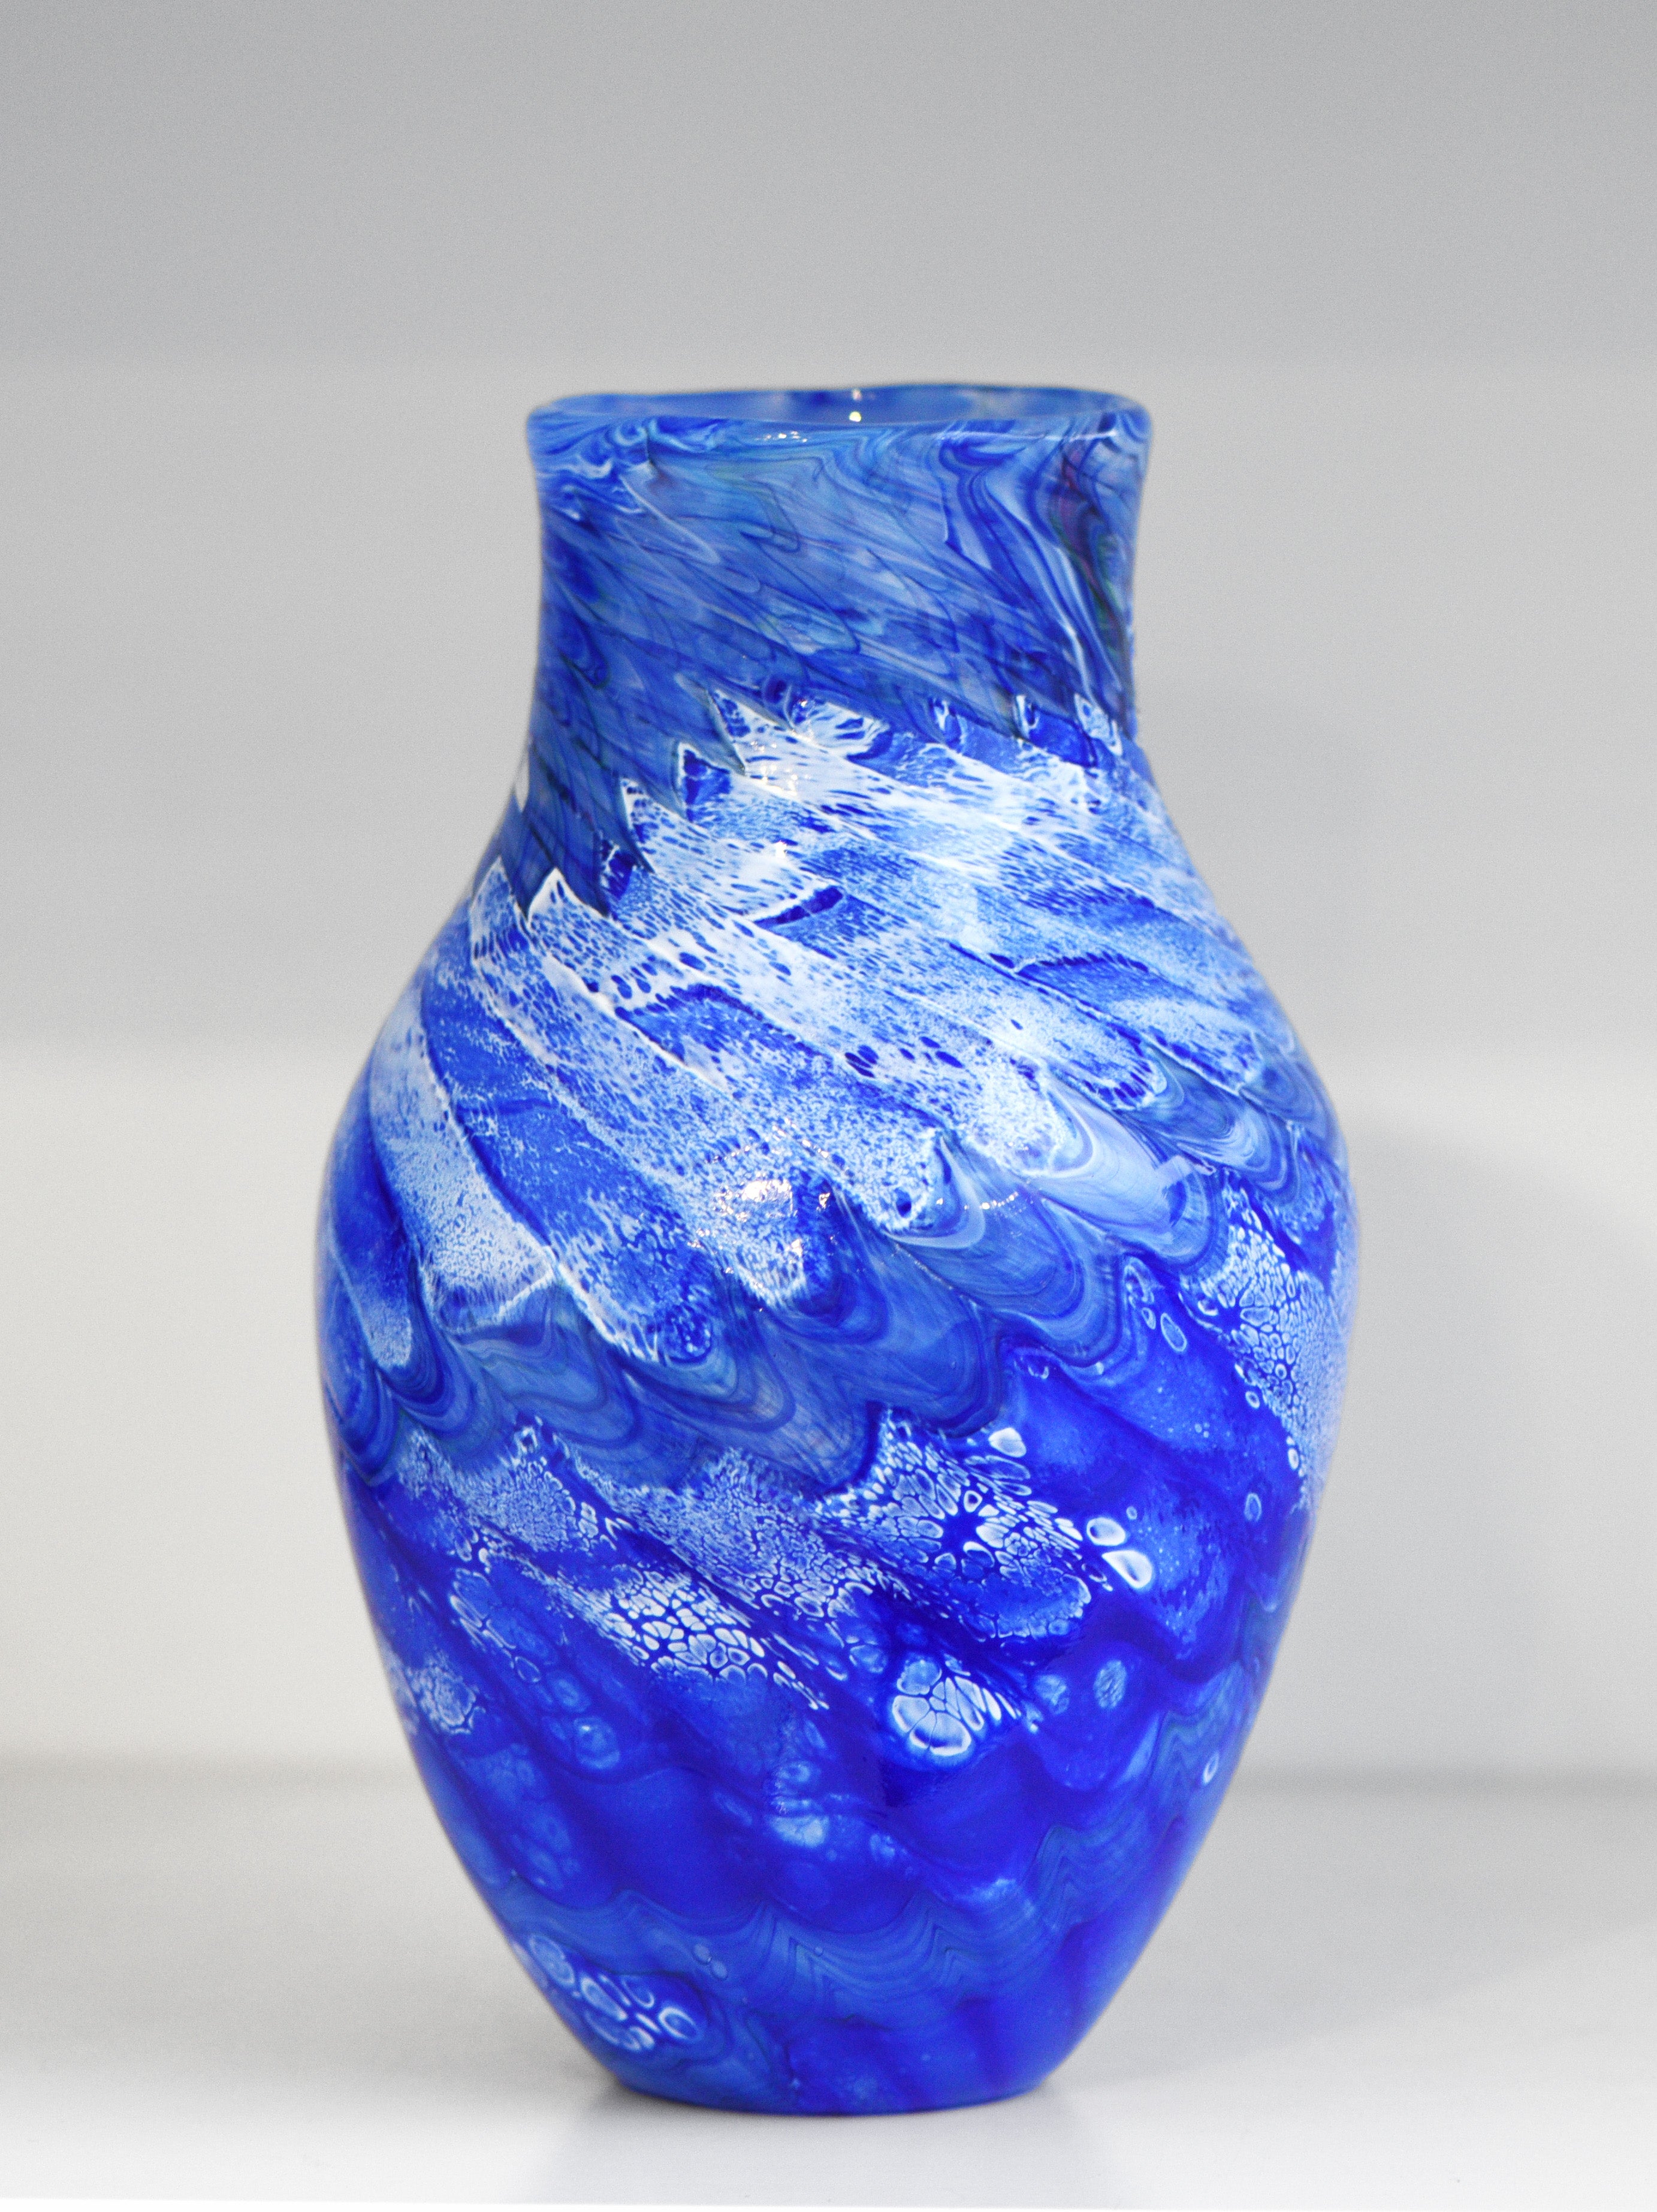 Twisted Blue, White & Black Vase